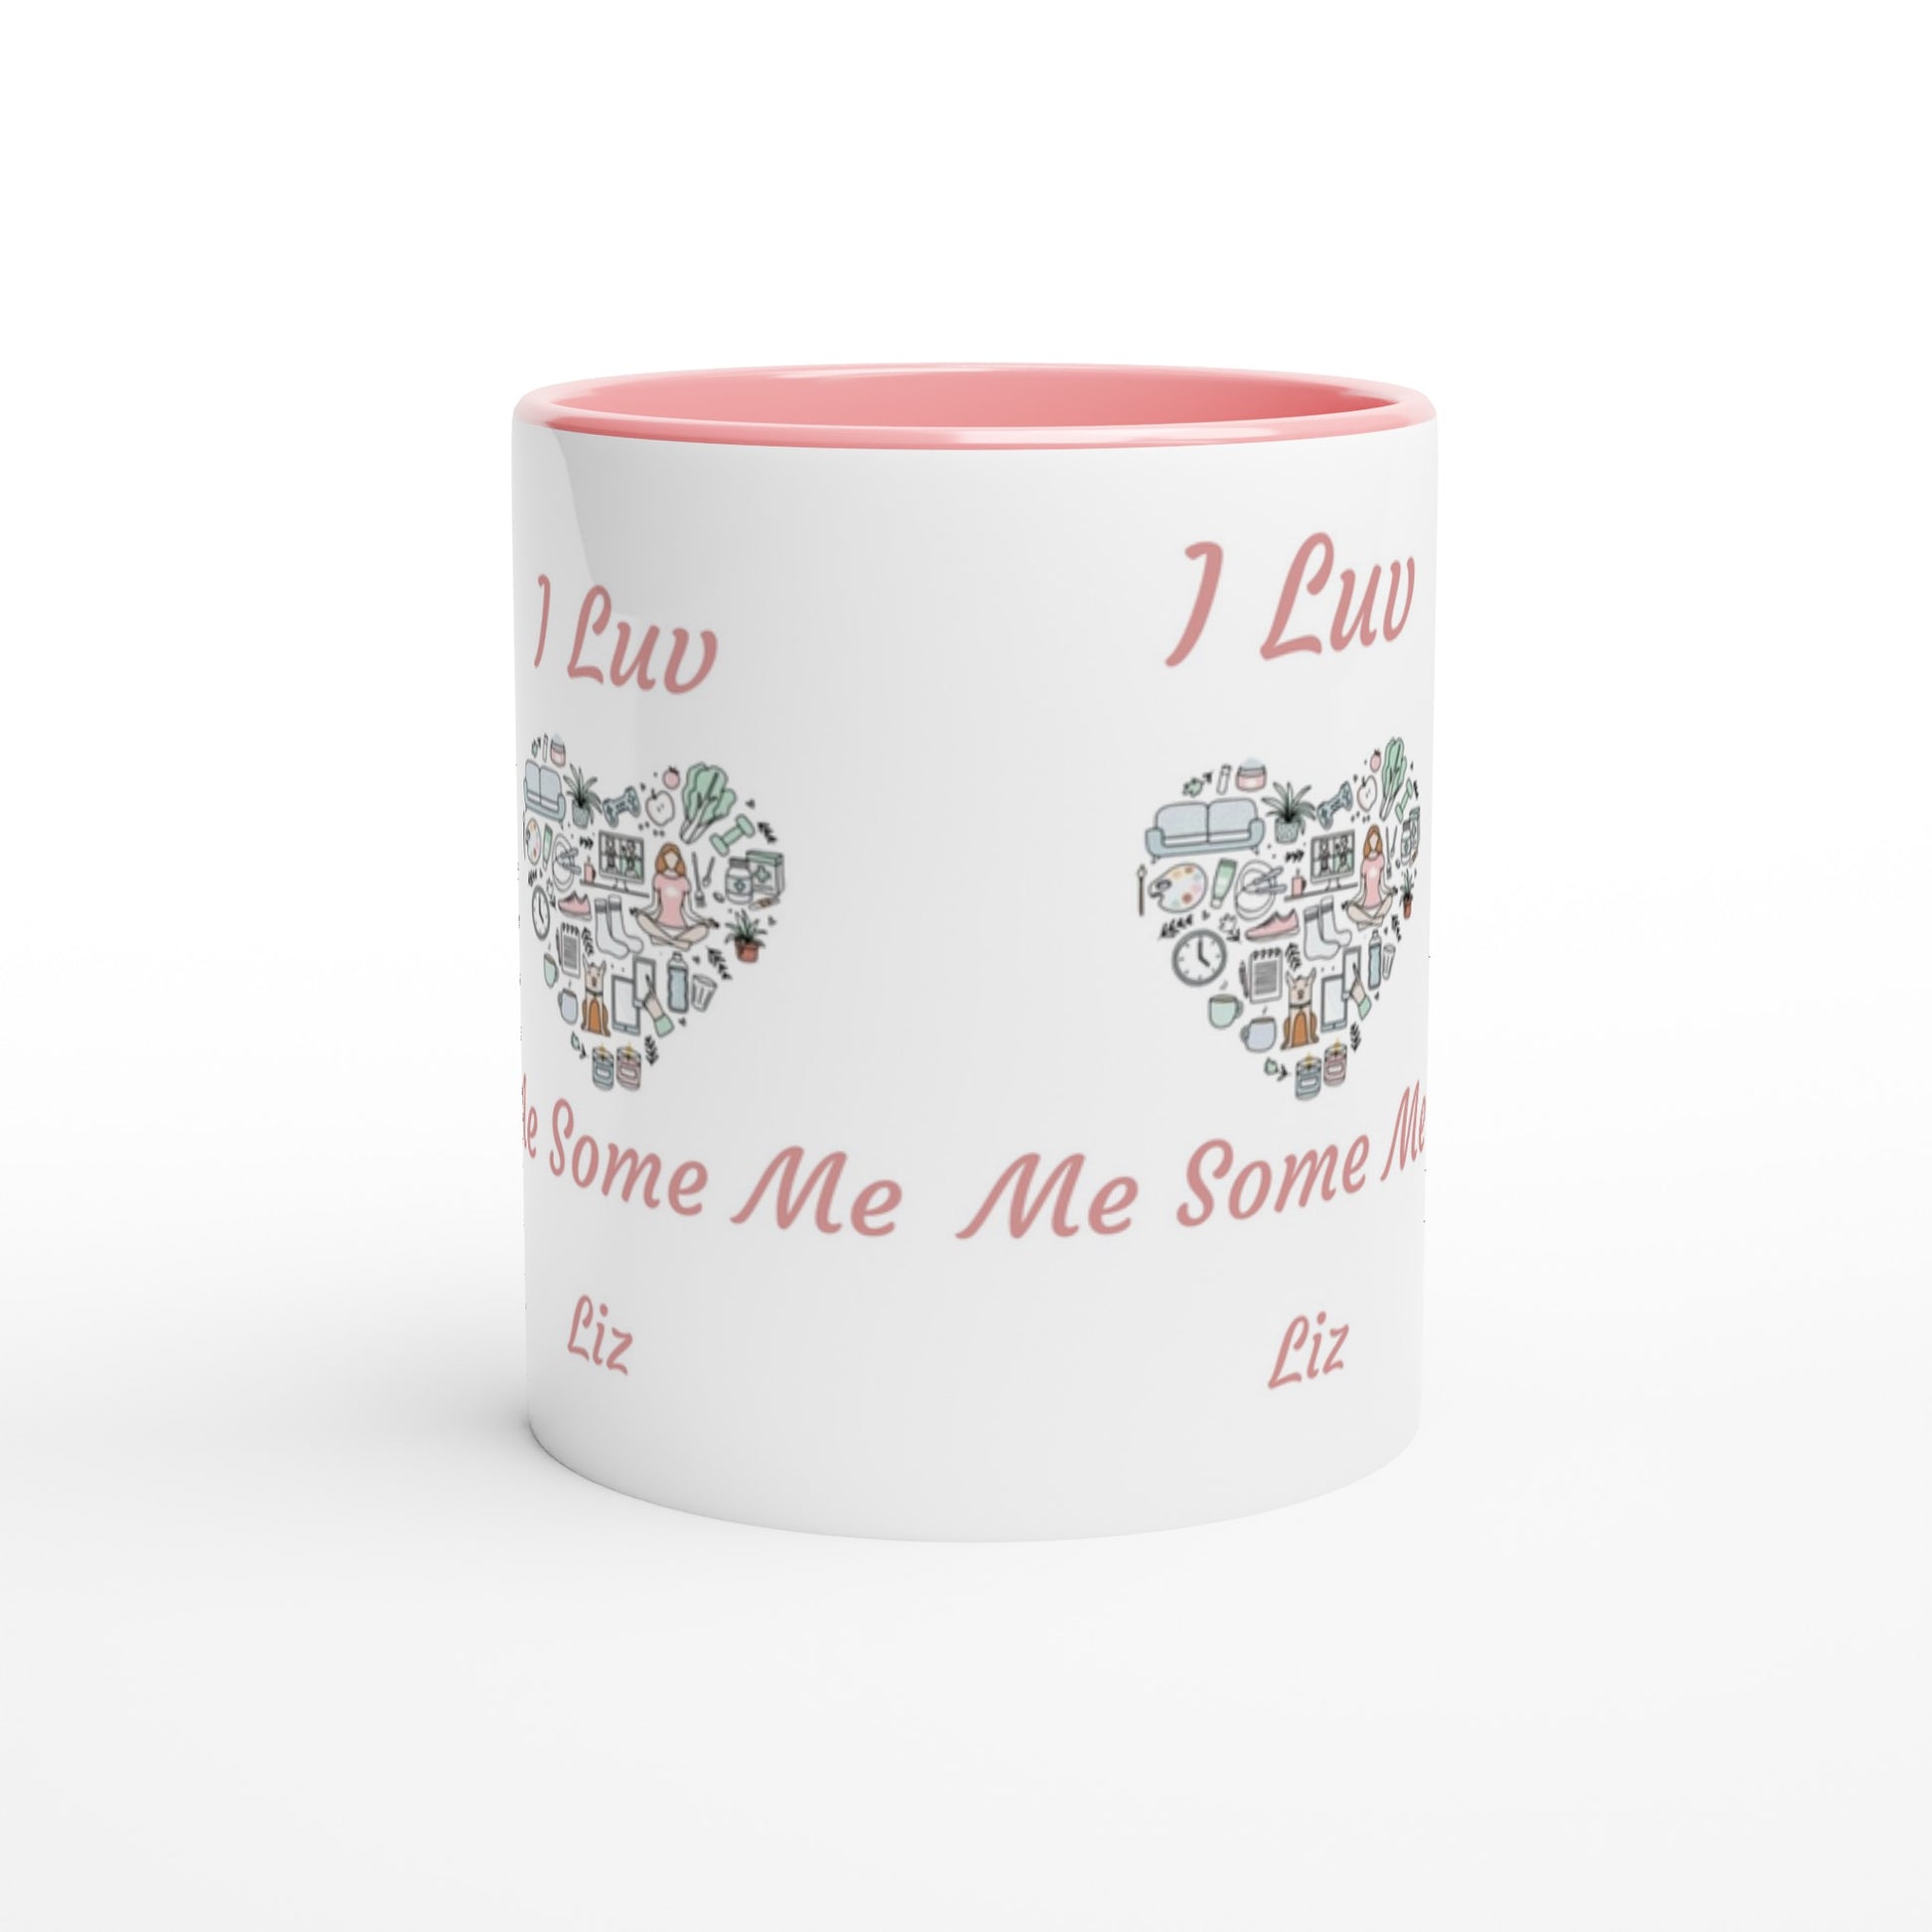 "I Luv Me Some Me" White N Pink Mug